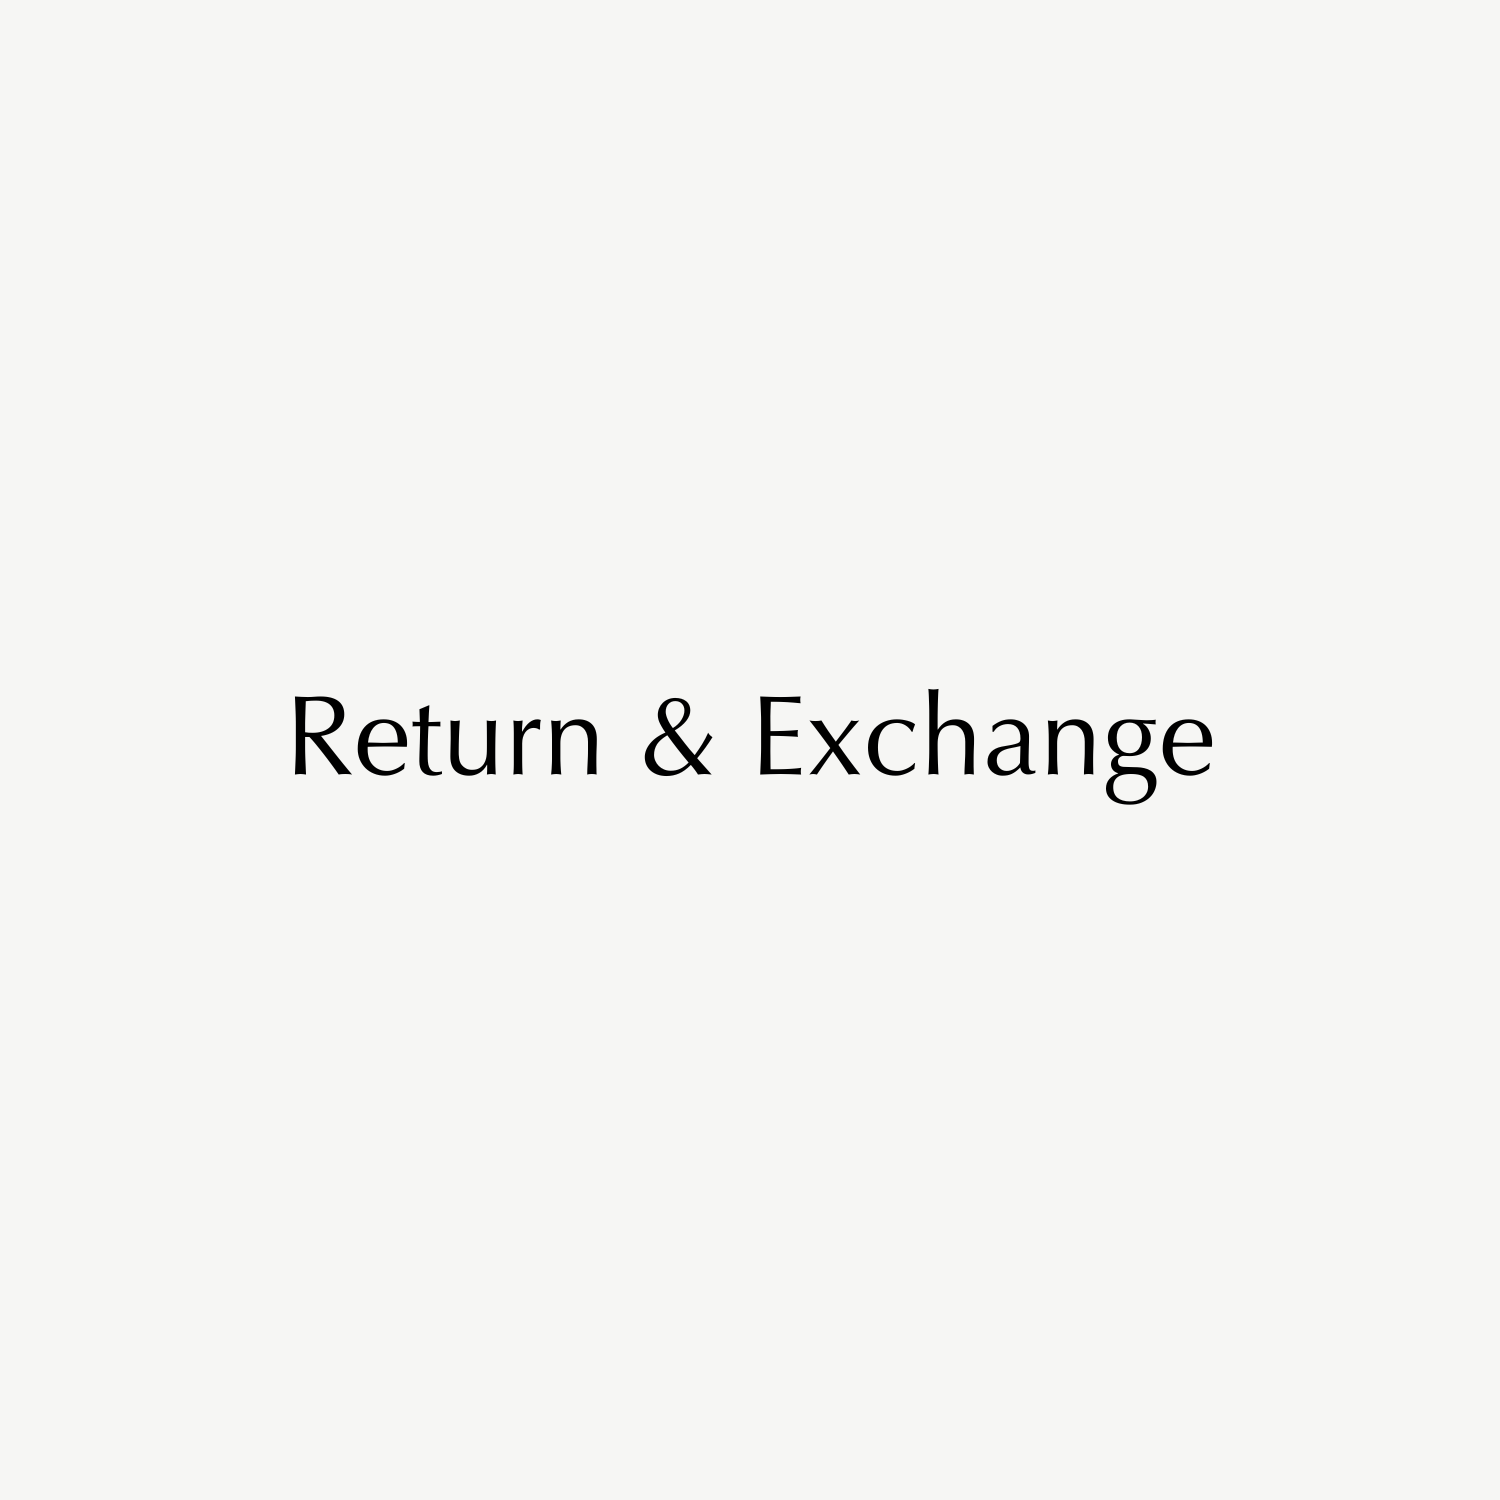 Return & Exchange